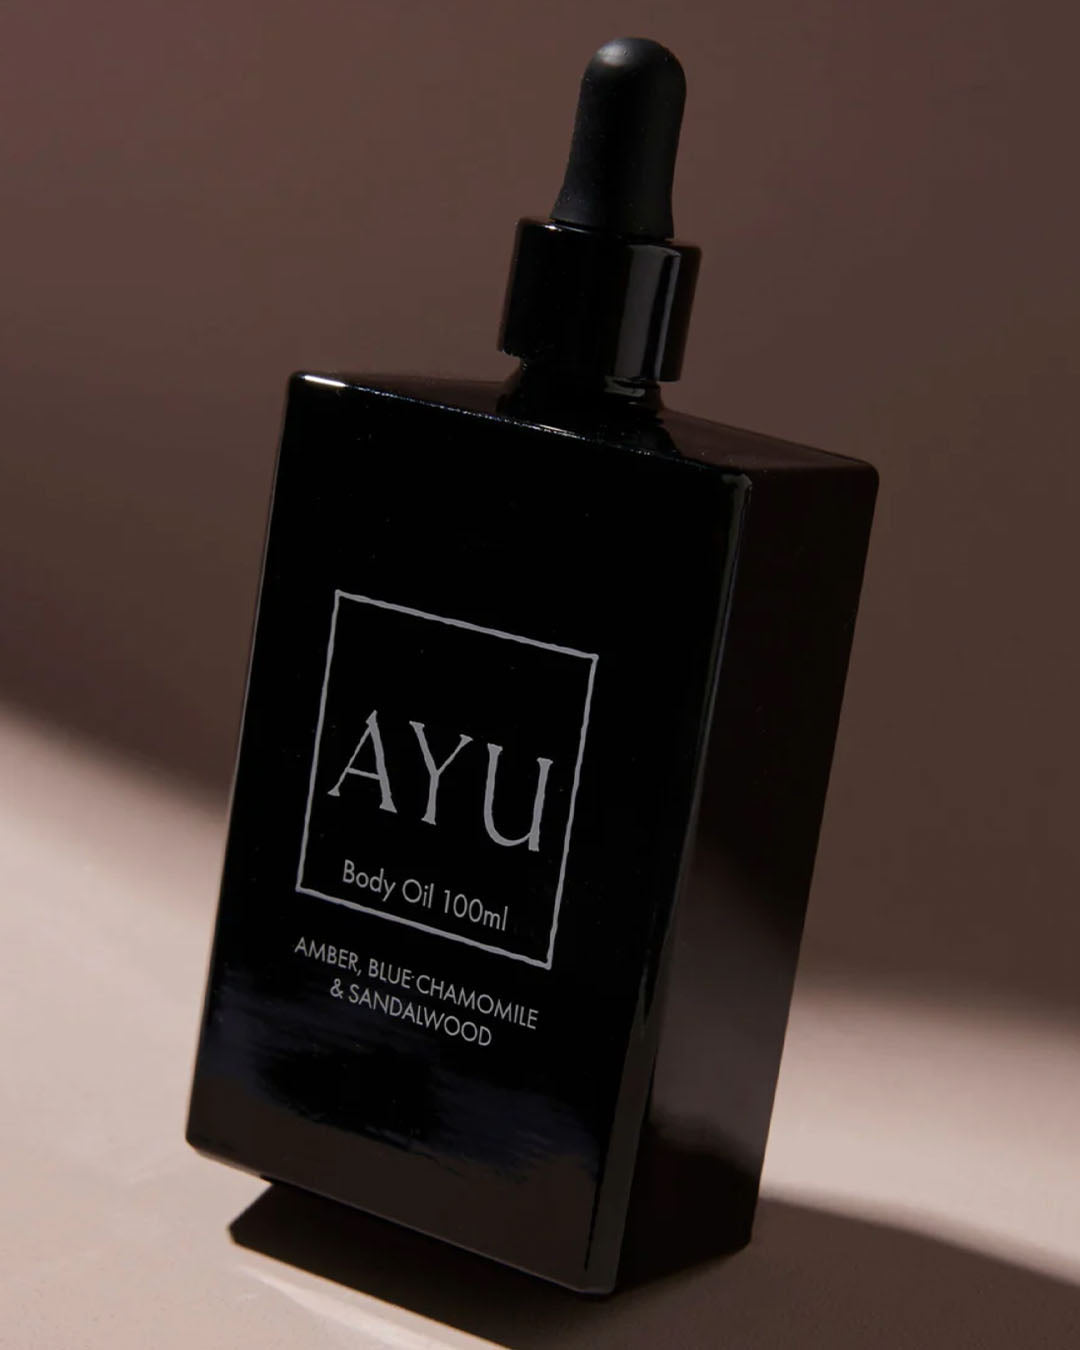 Amber, Blue Chamomile & Sandalwood Body Oil 100ml Skincare by Ayu - Prae Store